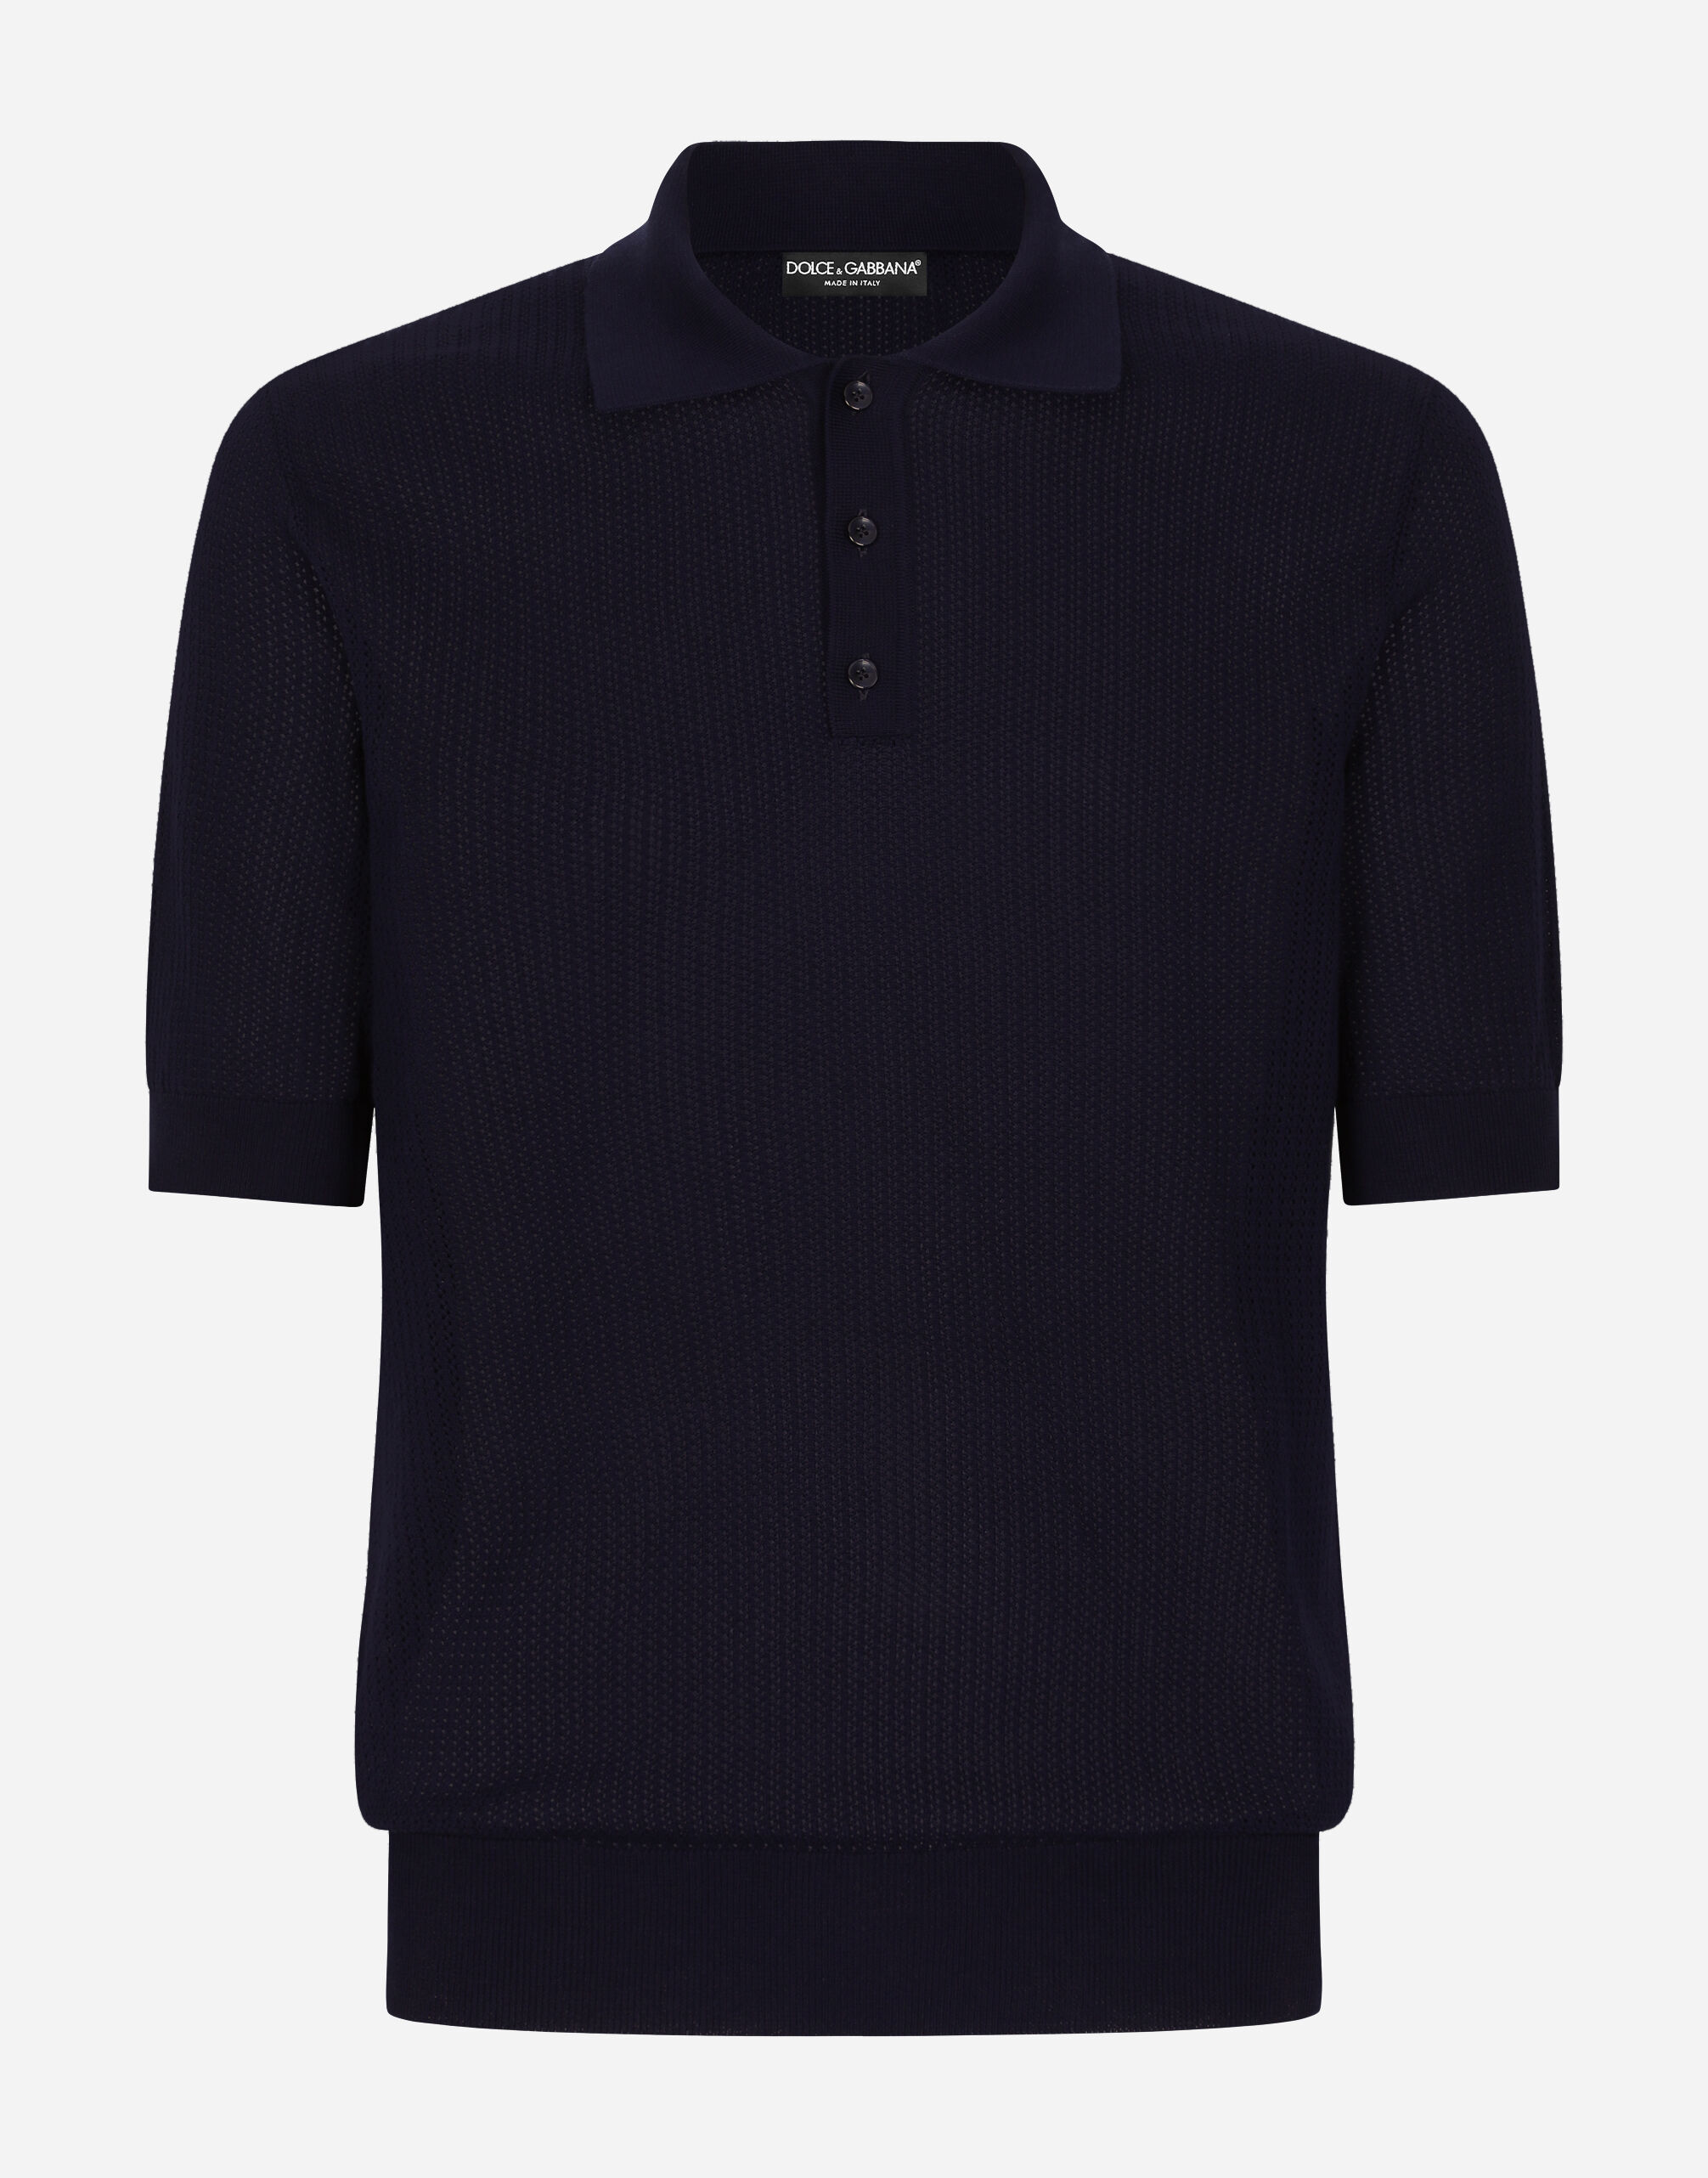 Dolce & Gabbana Cotton polo shirt with logo label Black GXL30TJAWM9